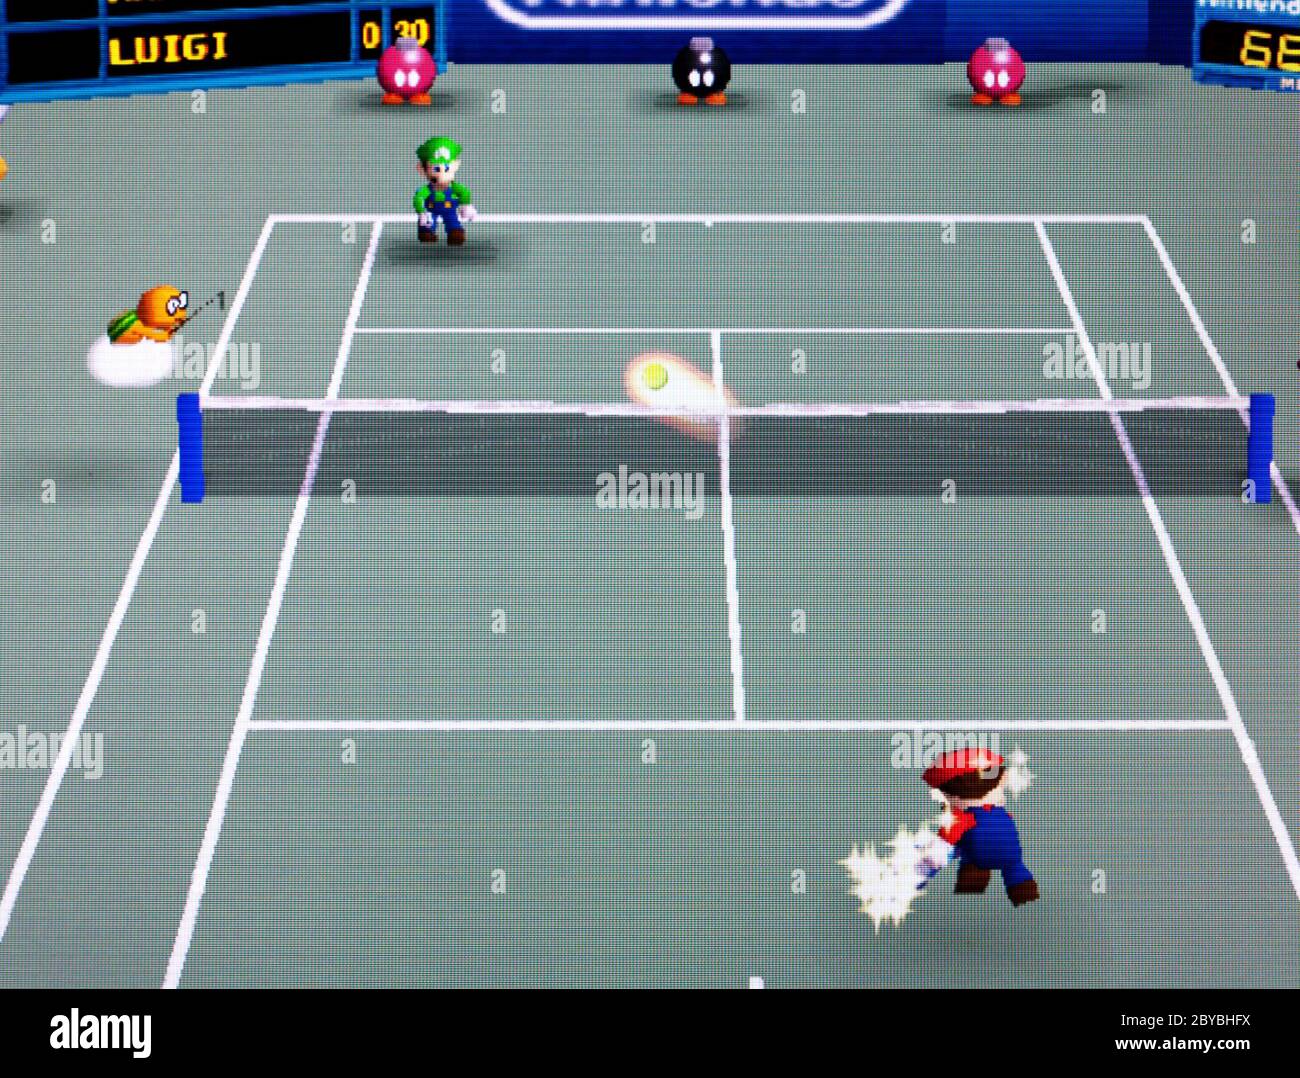 Mario Tennis - Nintendo 64 Videogame - Editorial use only Stock Photo -  Alamy